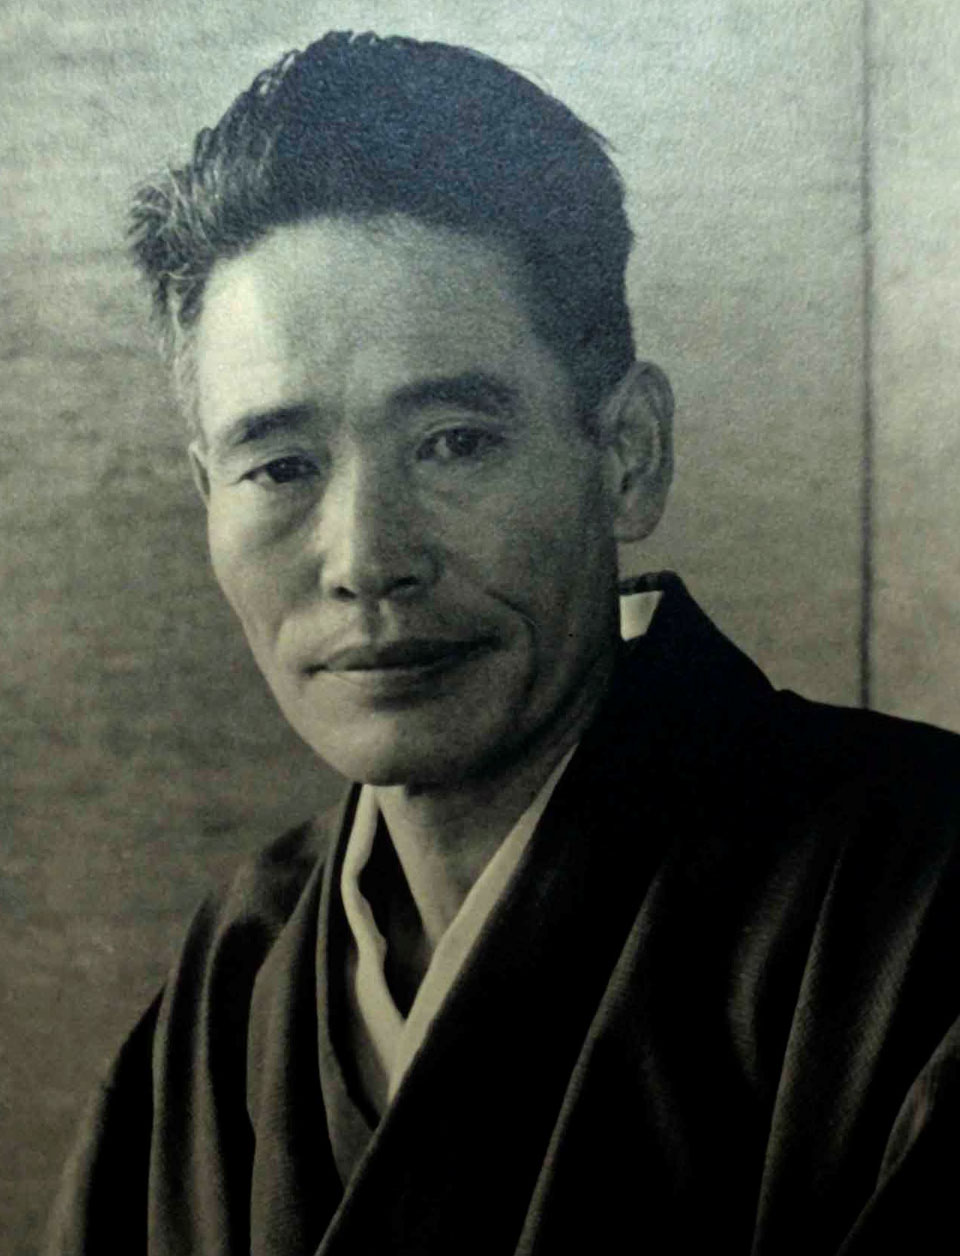 A black and white photographic portrait of Chiura Obata.